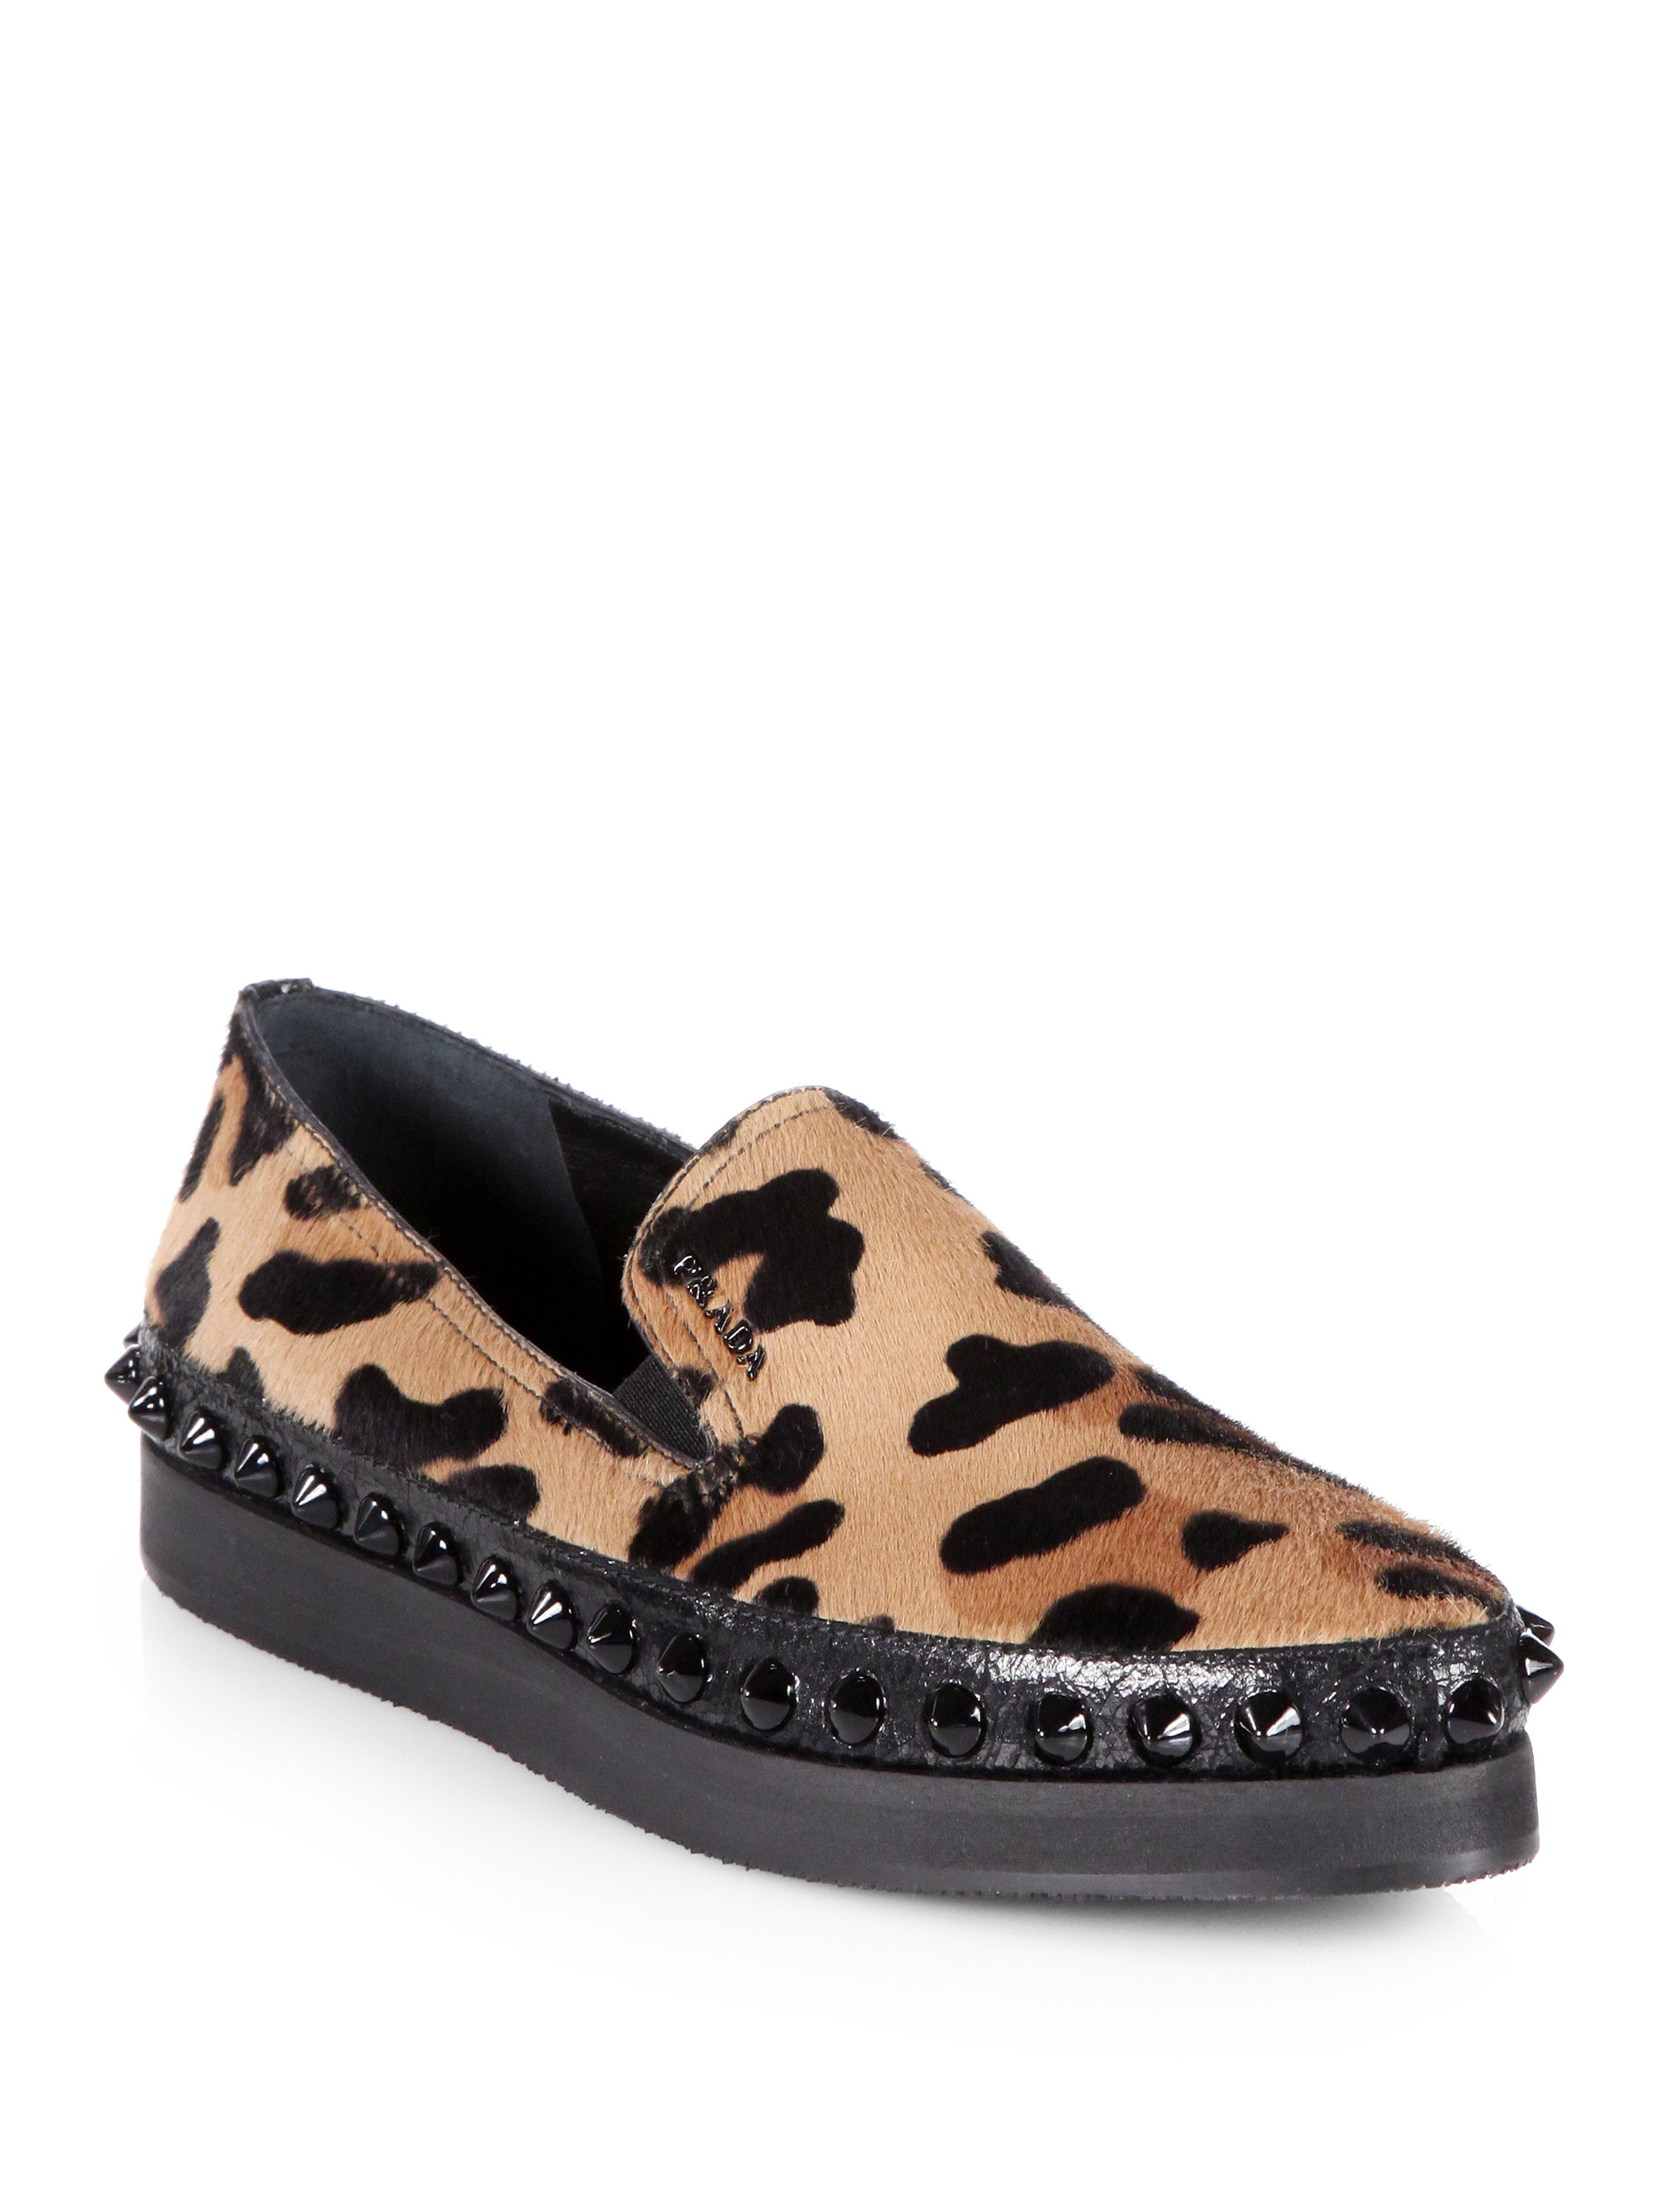 Lyst - Prada Leopardprint Calf Hair Studded Platform Loafers in Black